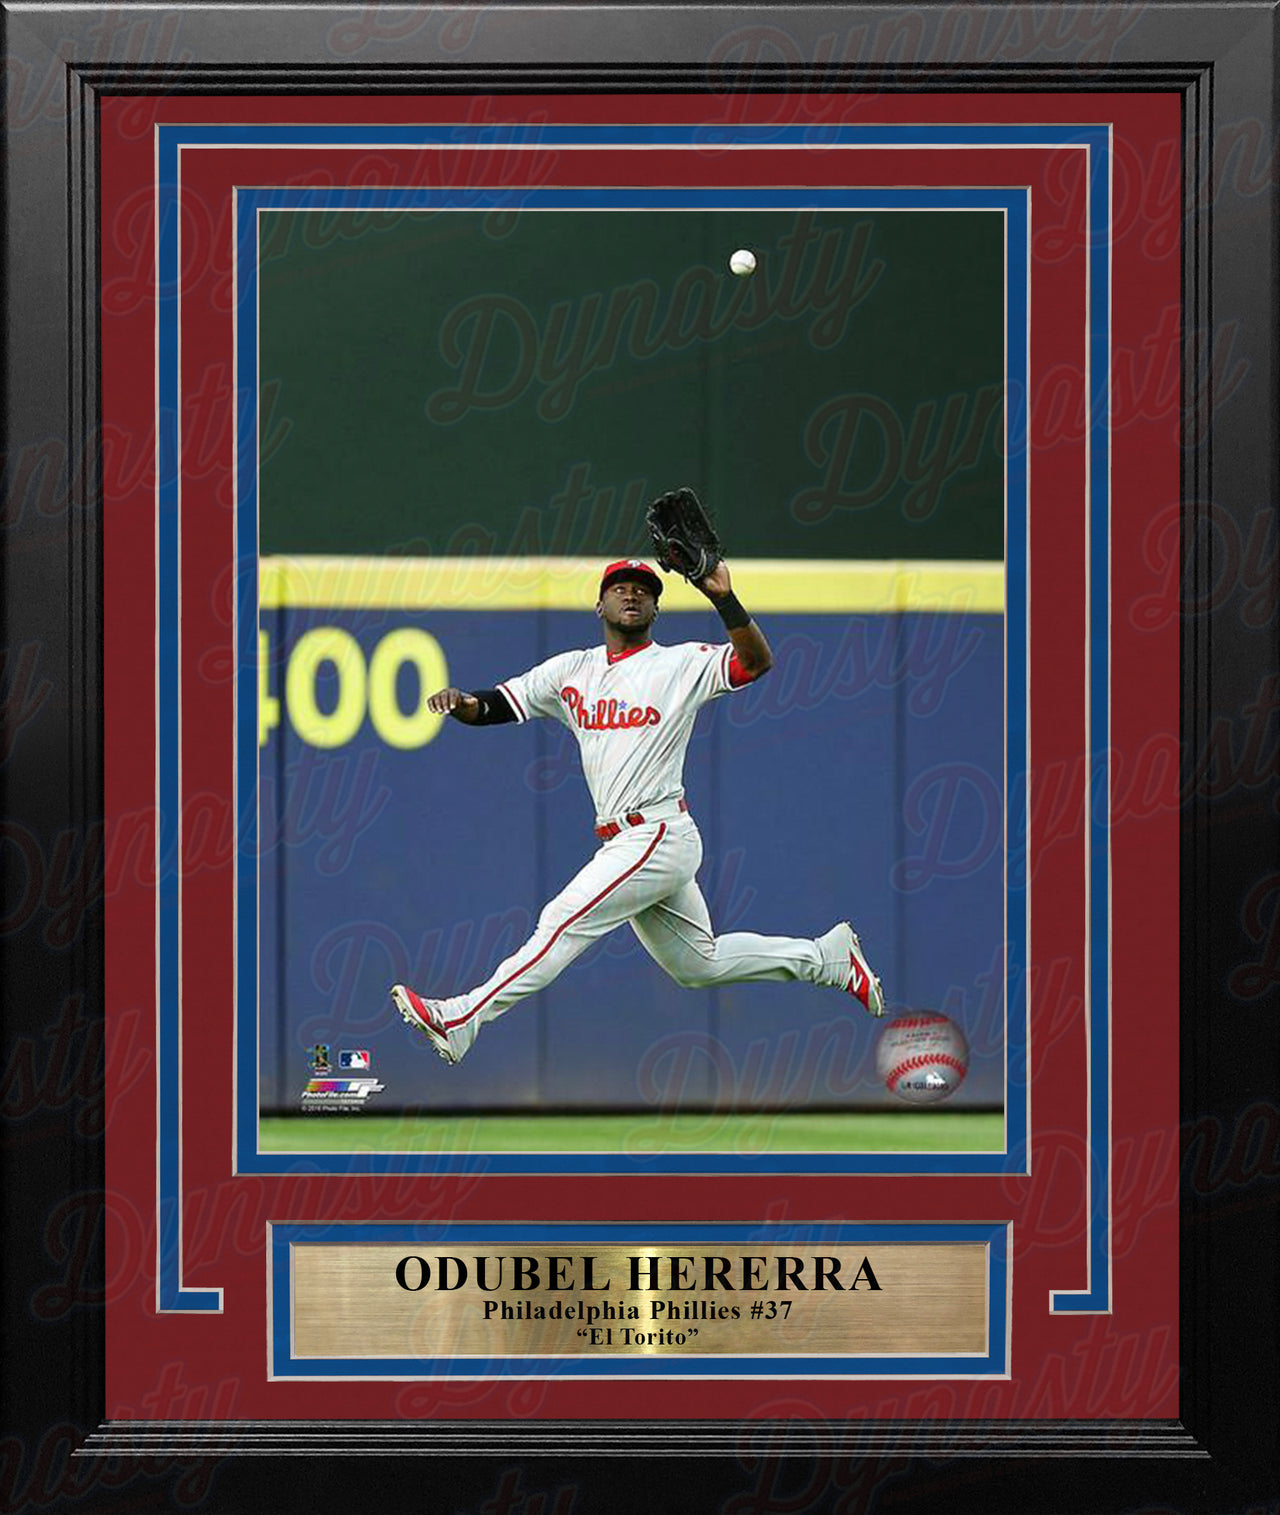 Odubel Herrera Philadelphia Phillies Jump Catch MLB Baseball Framed and Matted Photo - Dynasty Sports & Framing 